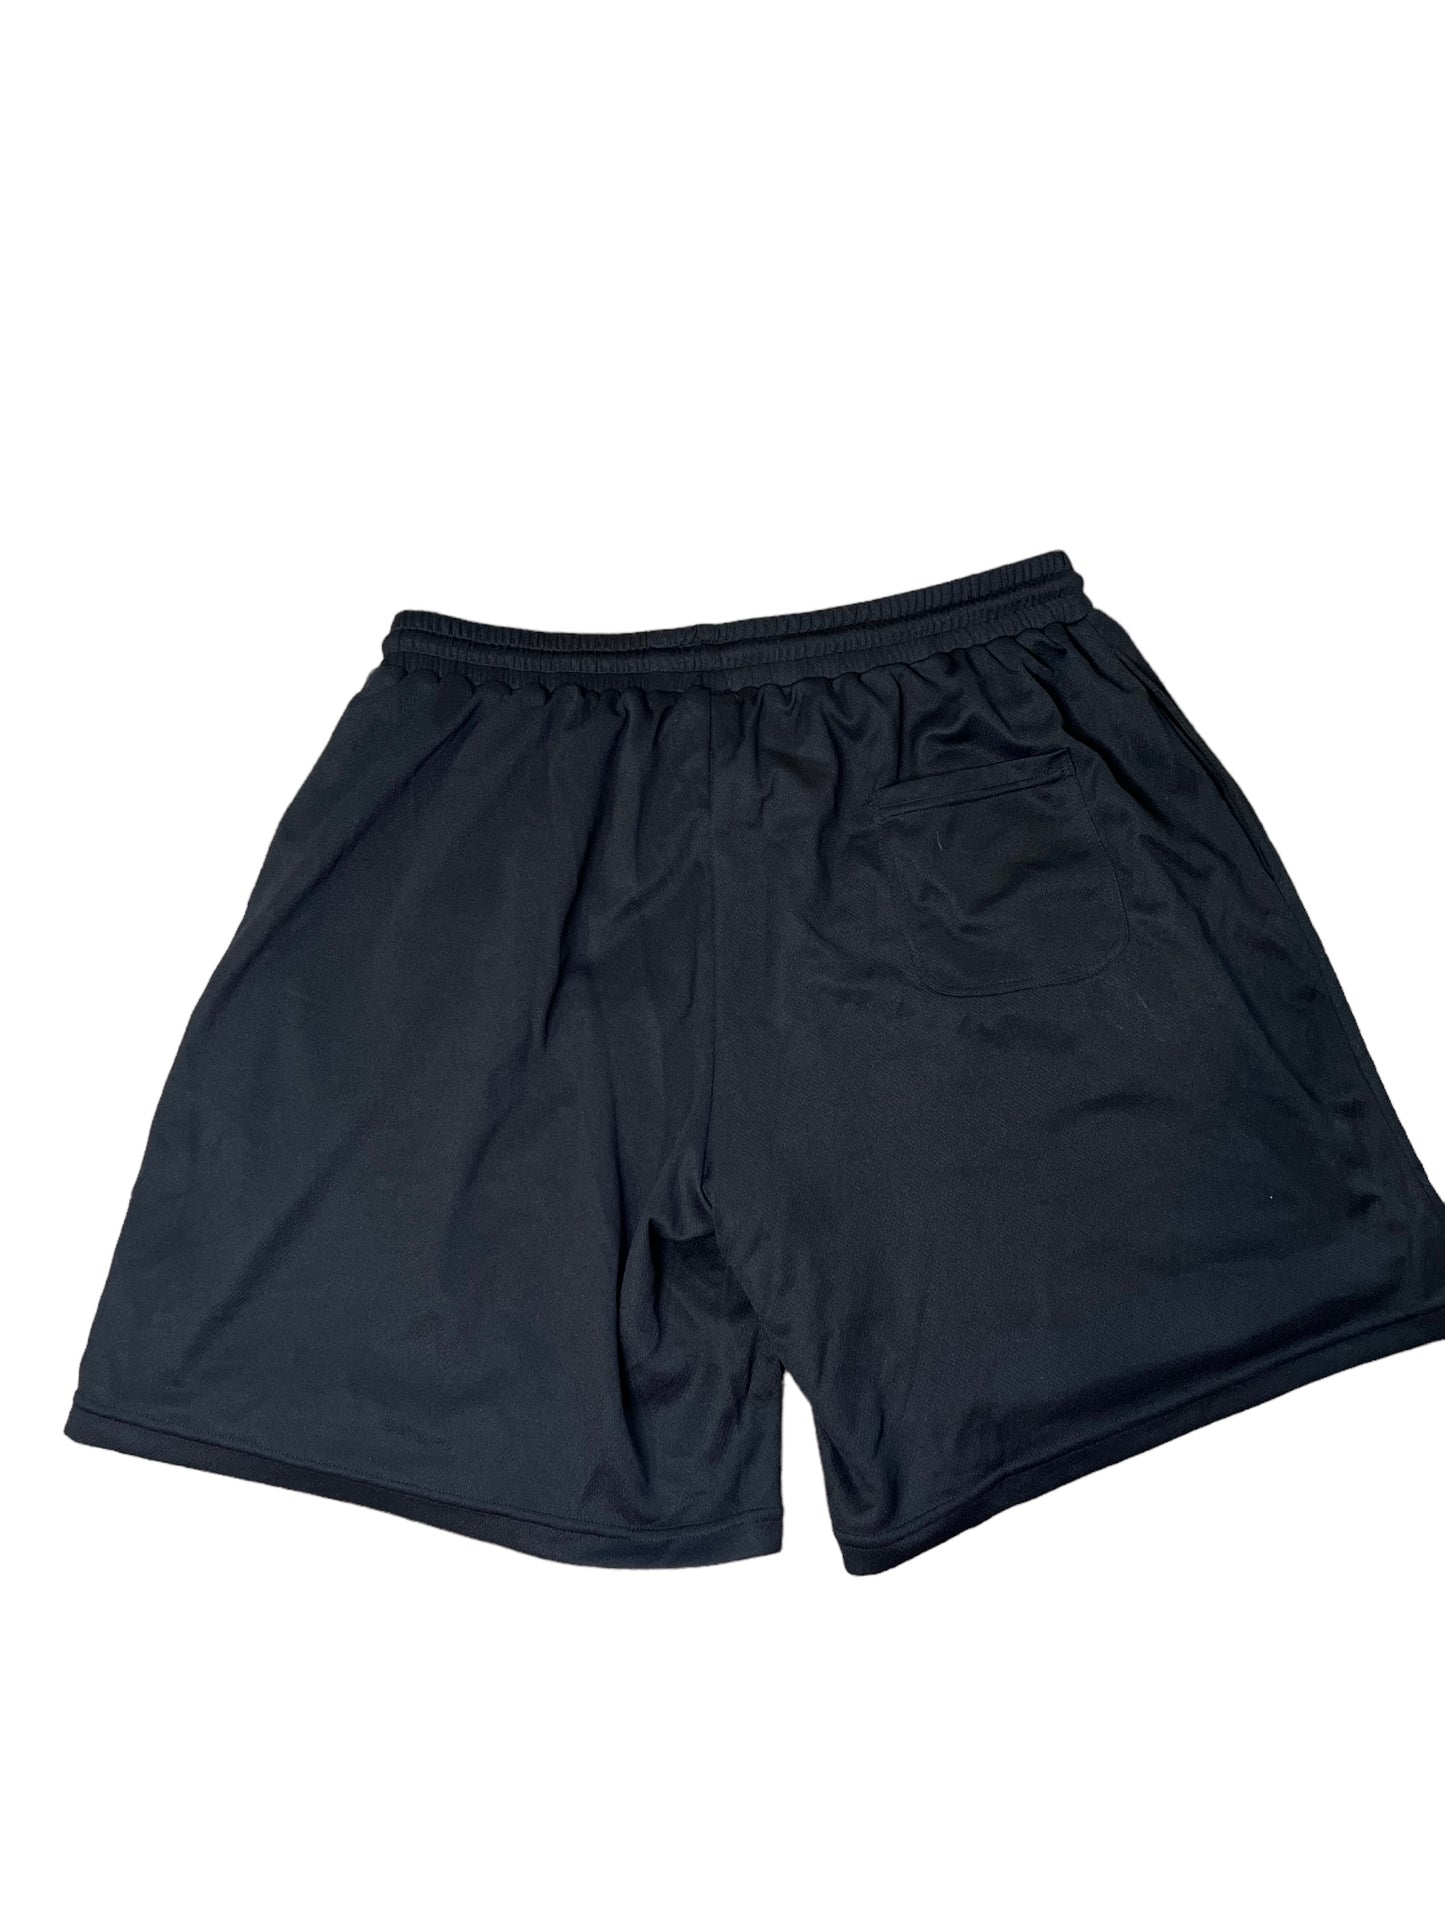 plain black mesh shorts